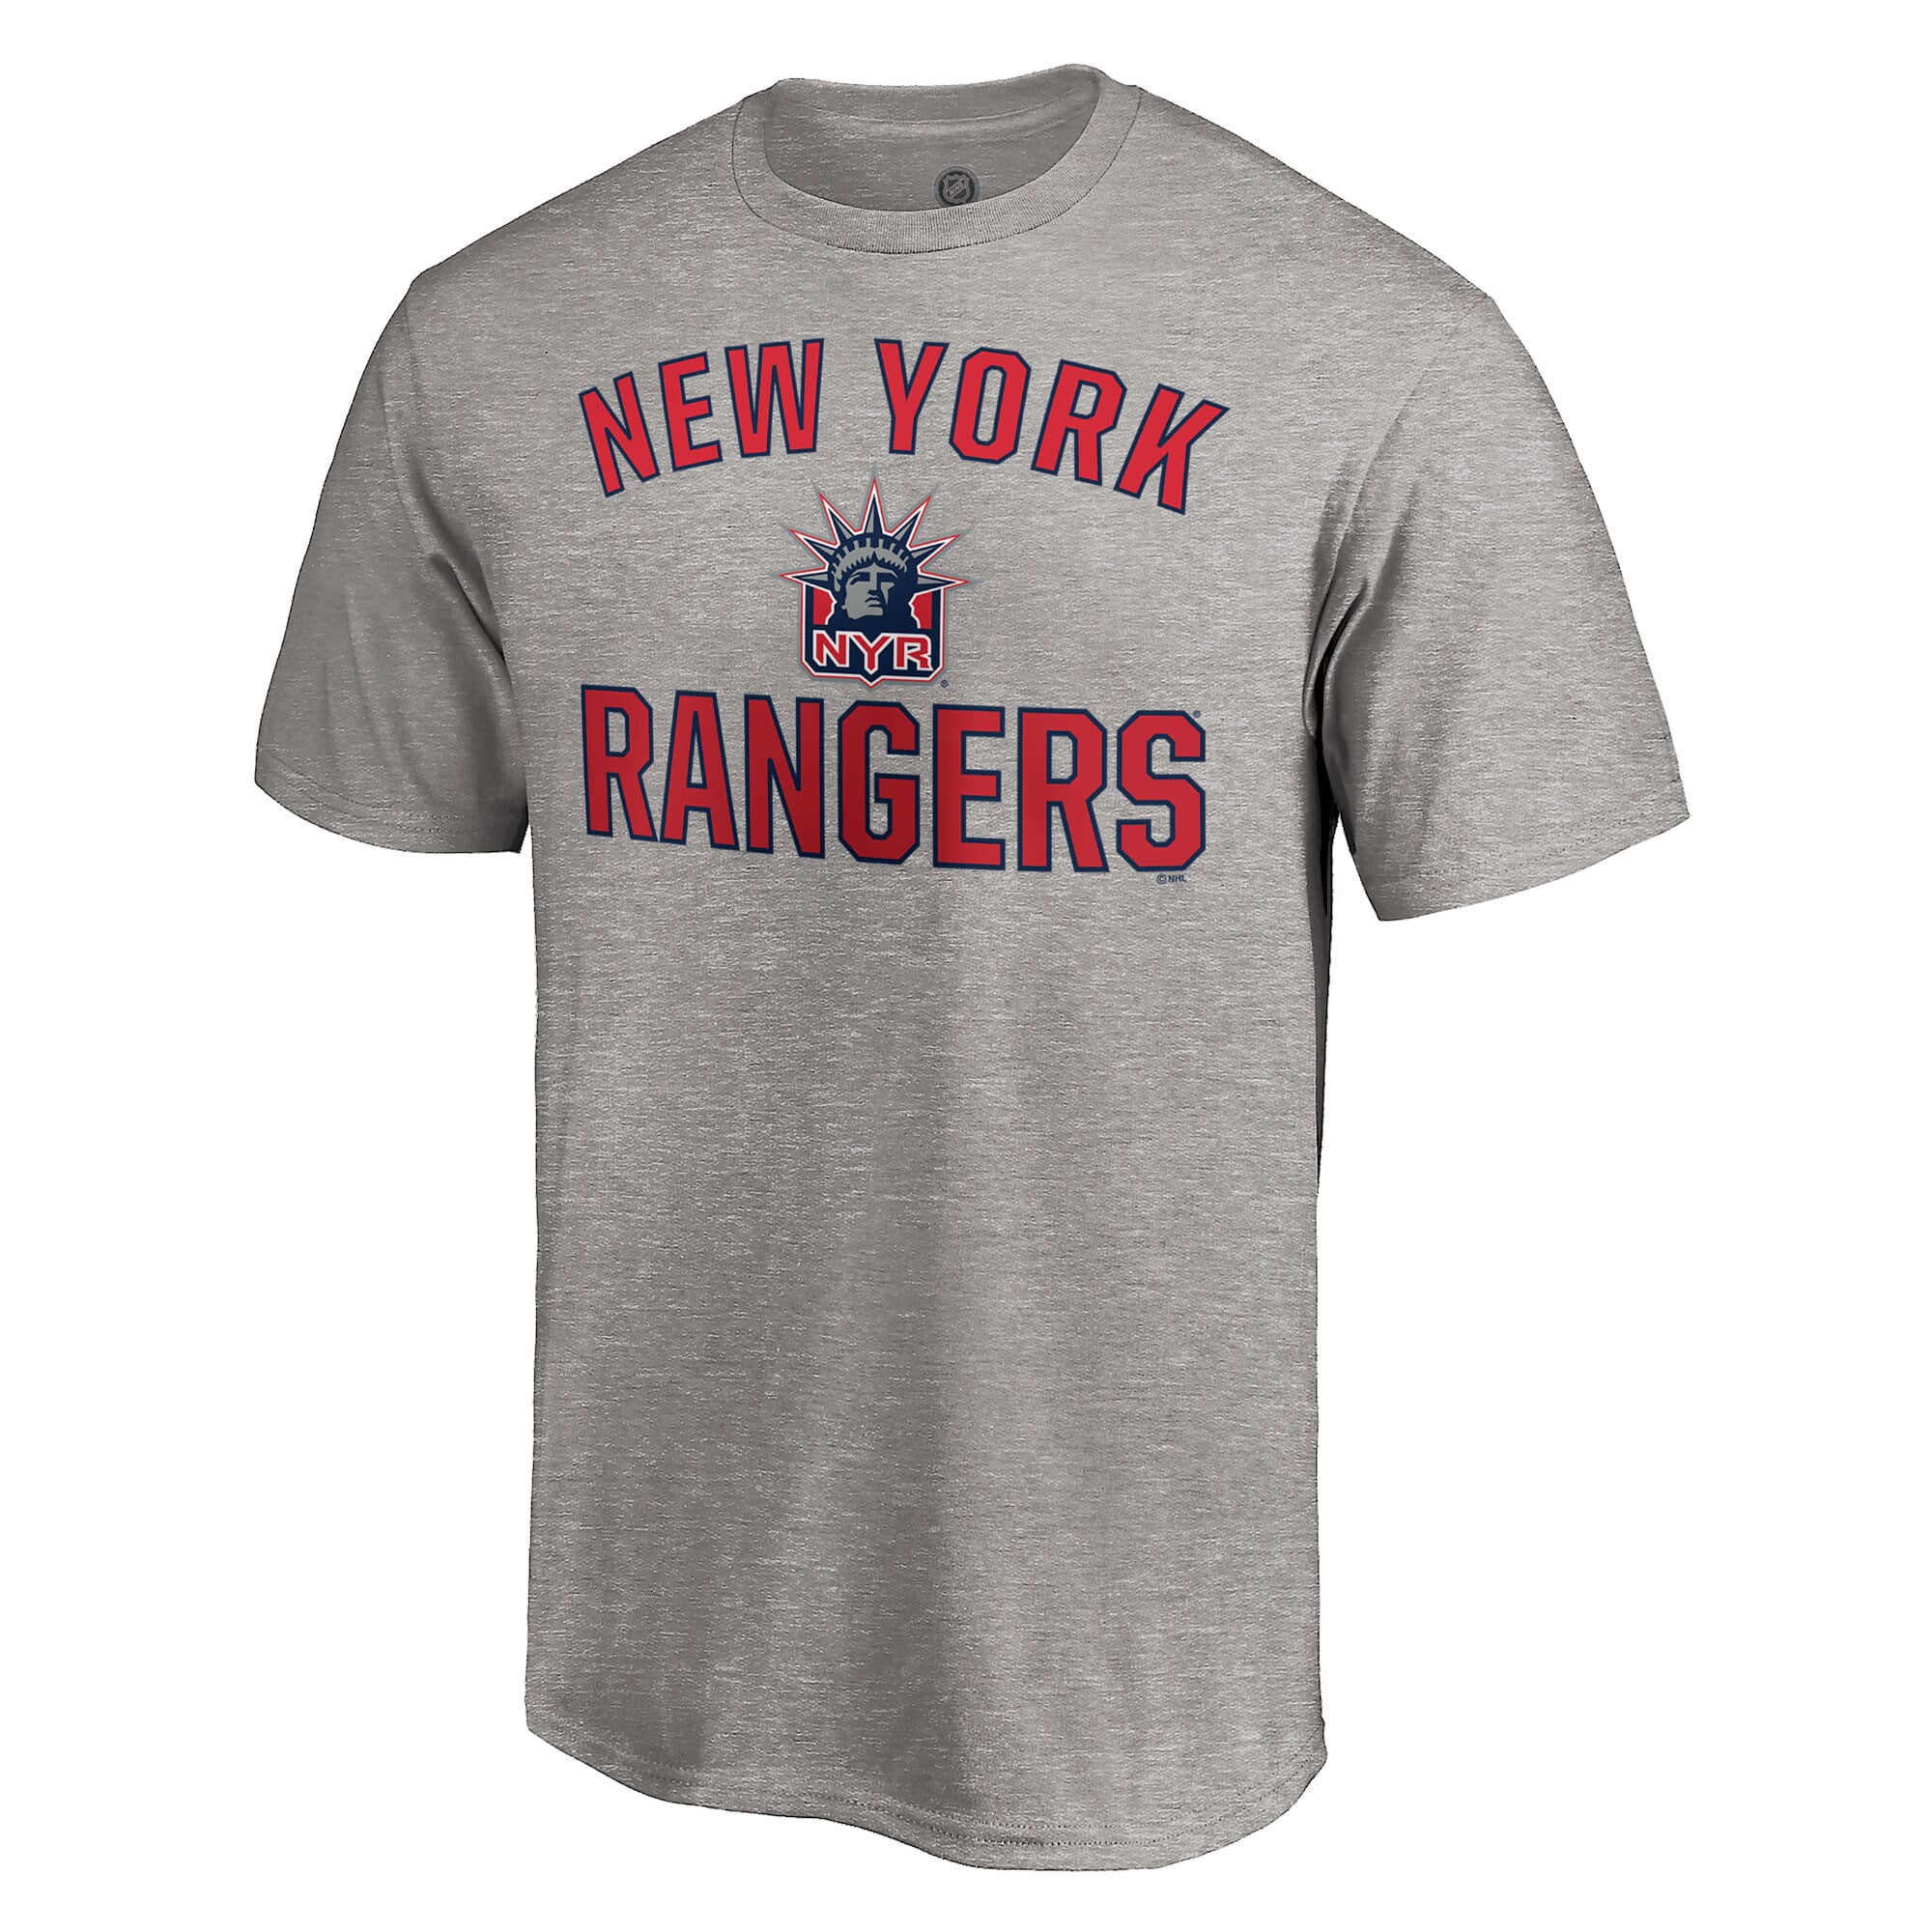 rangers special fan shirt